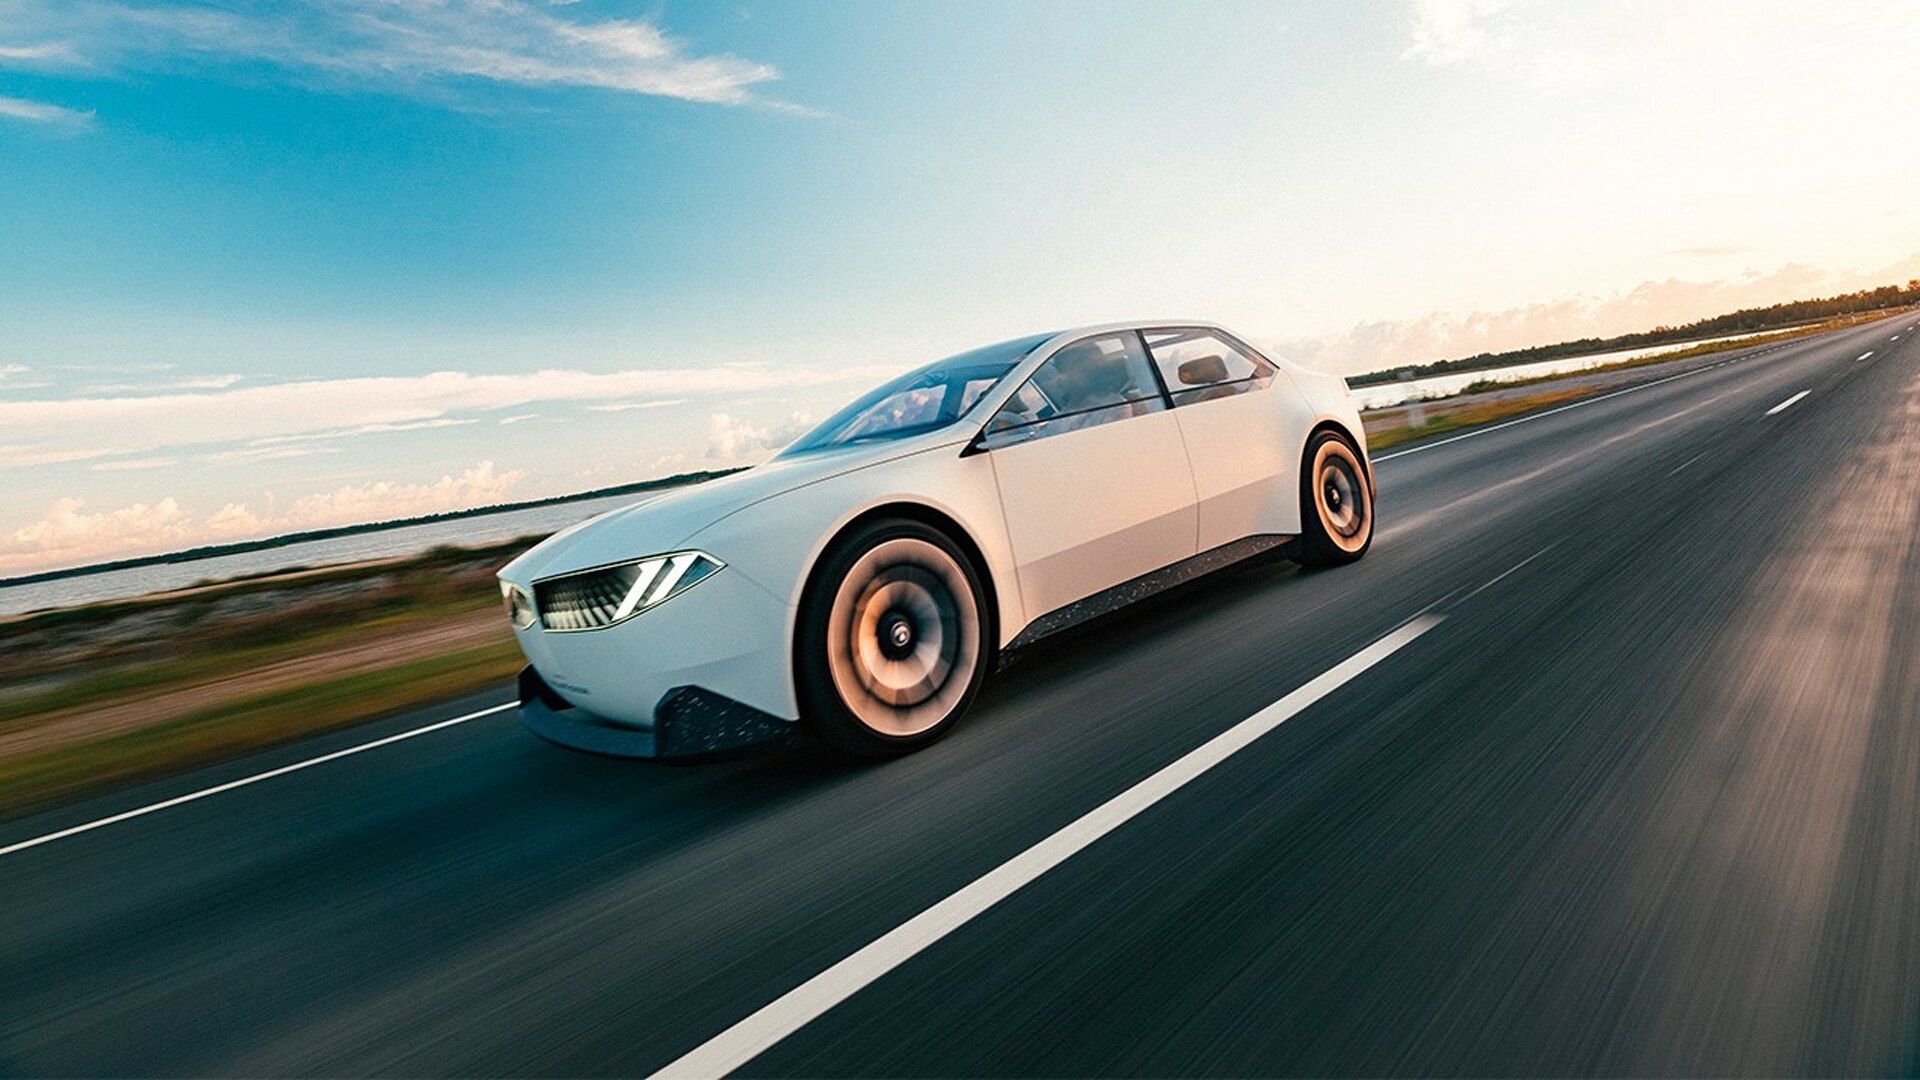 BMW Vision Neue Klasse X Concept A Glimpse Into the Future Of Electric SUVs